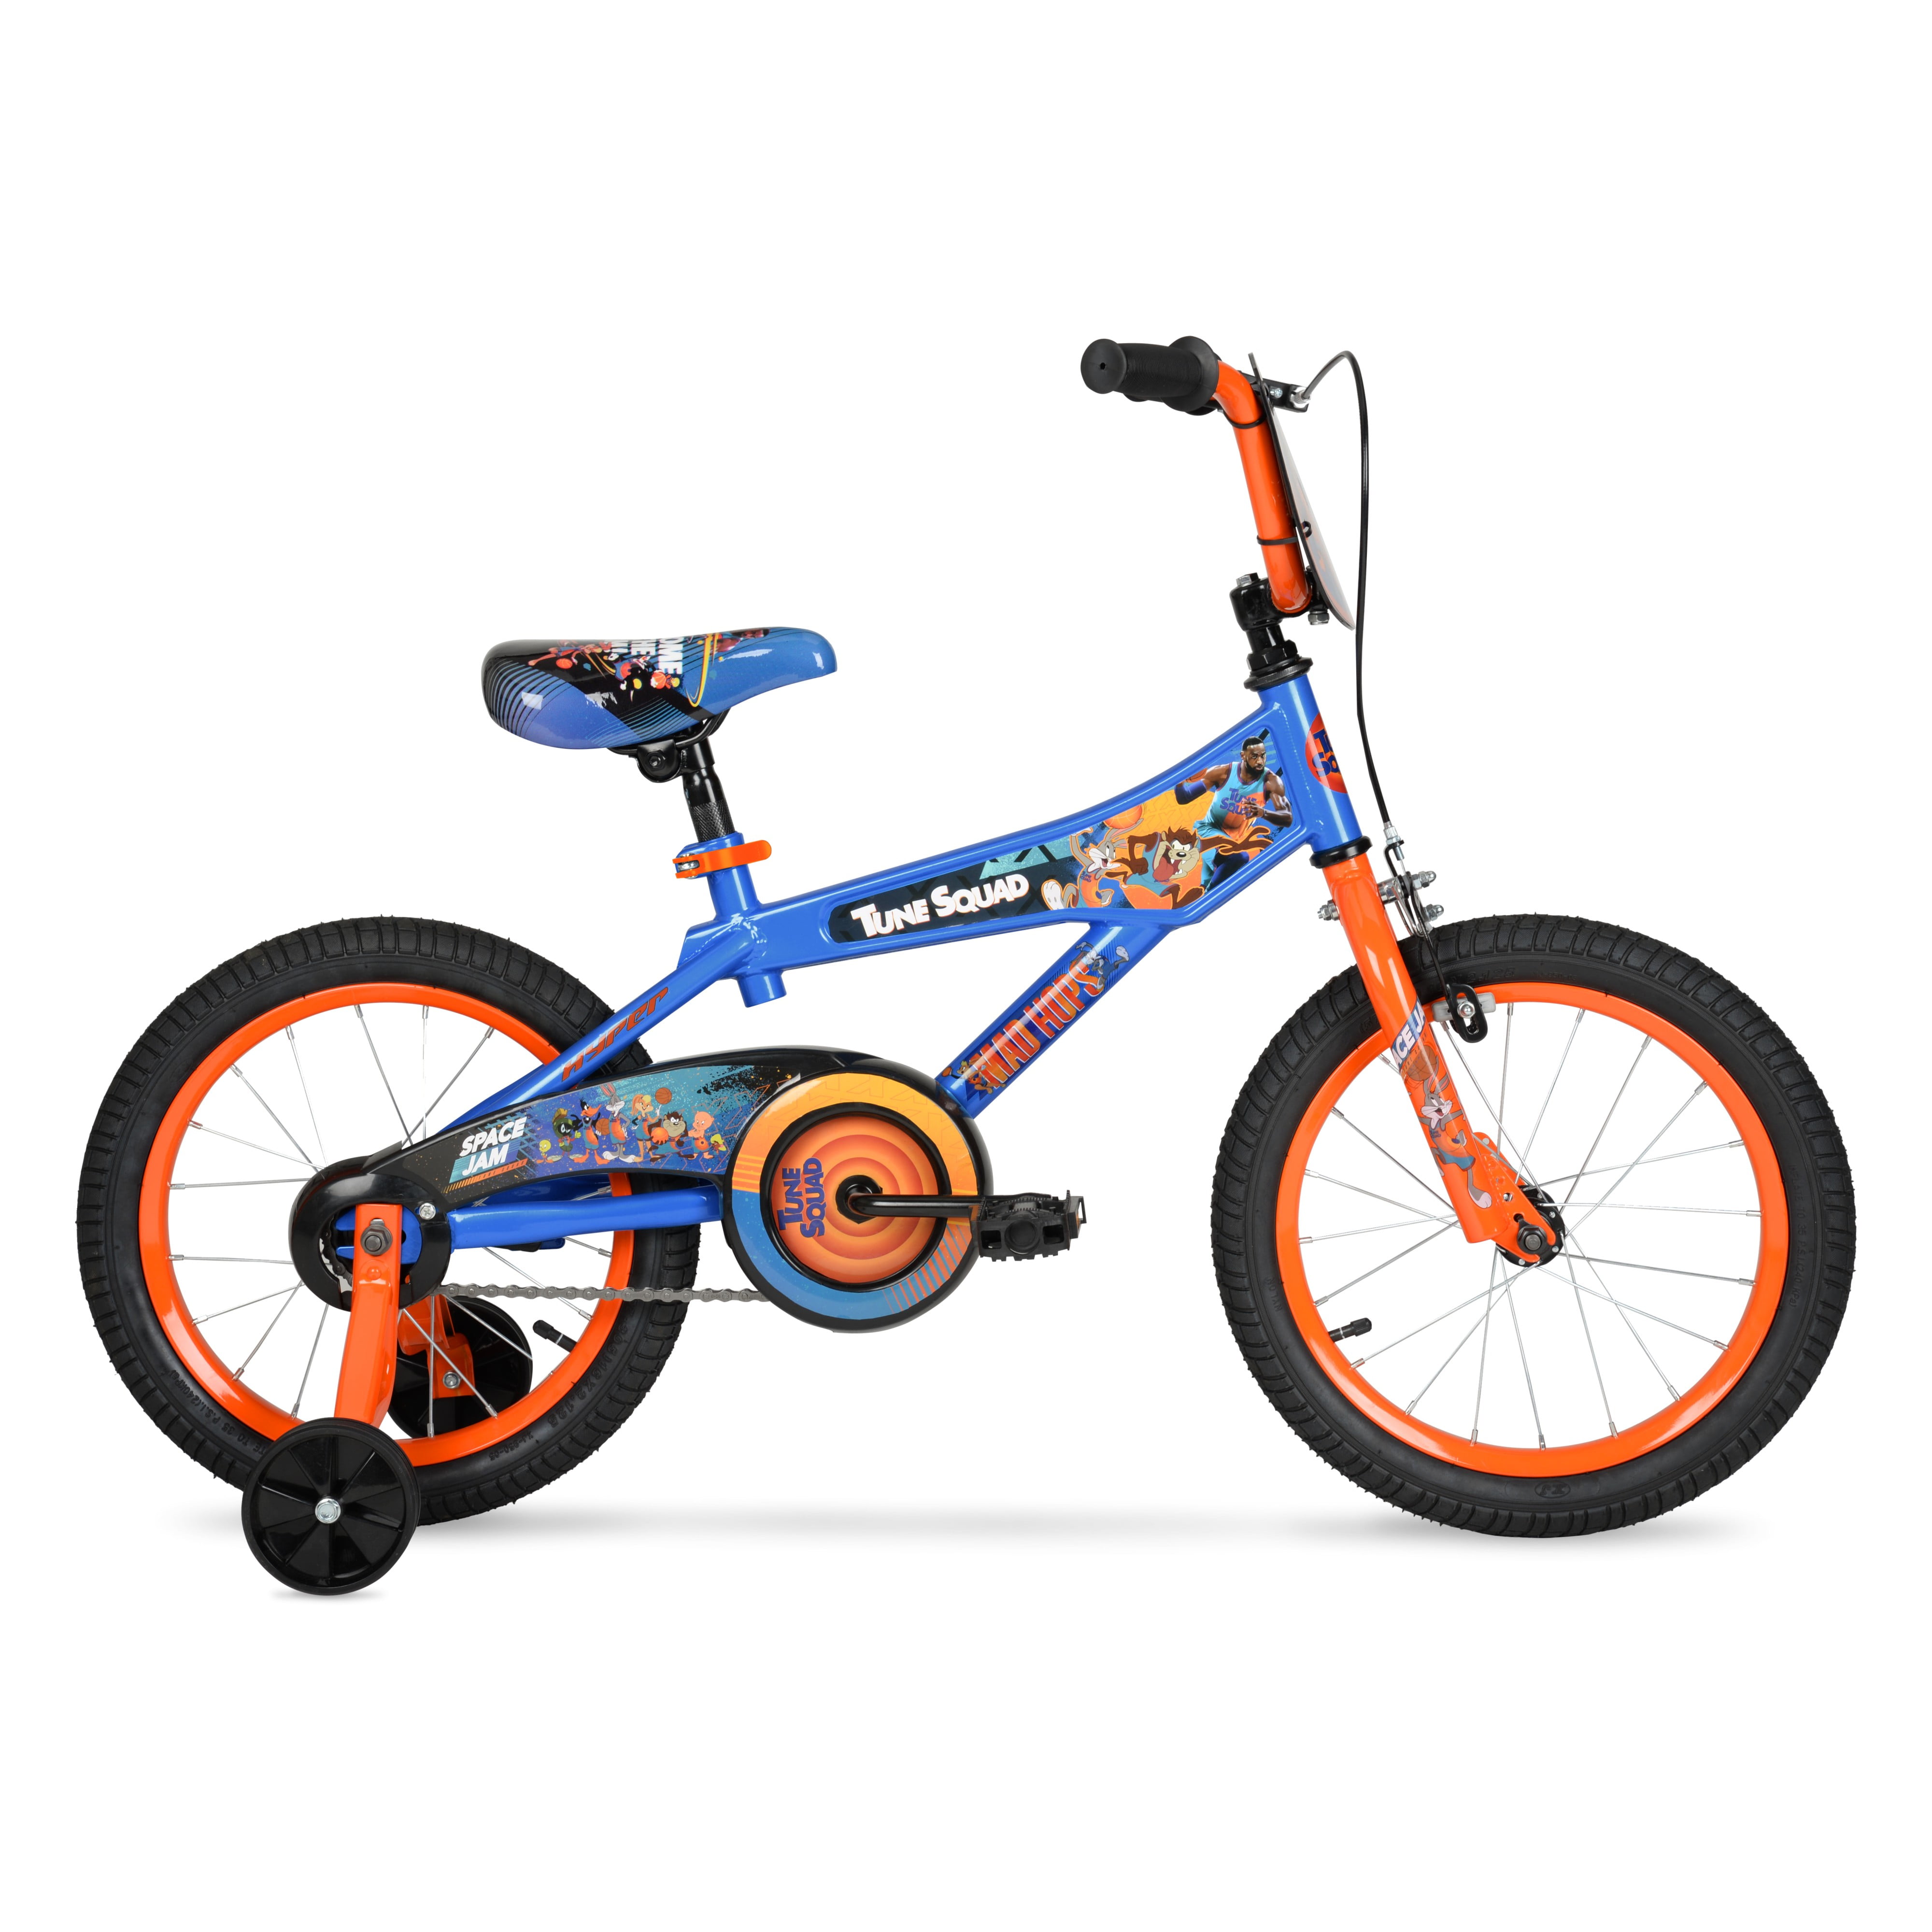 Kids Moto Bike Bicycle Motobike BMX Bikes for Boys Blue 16 inch Outdoor Gifts 